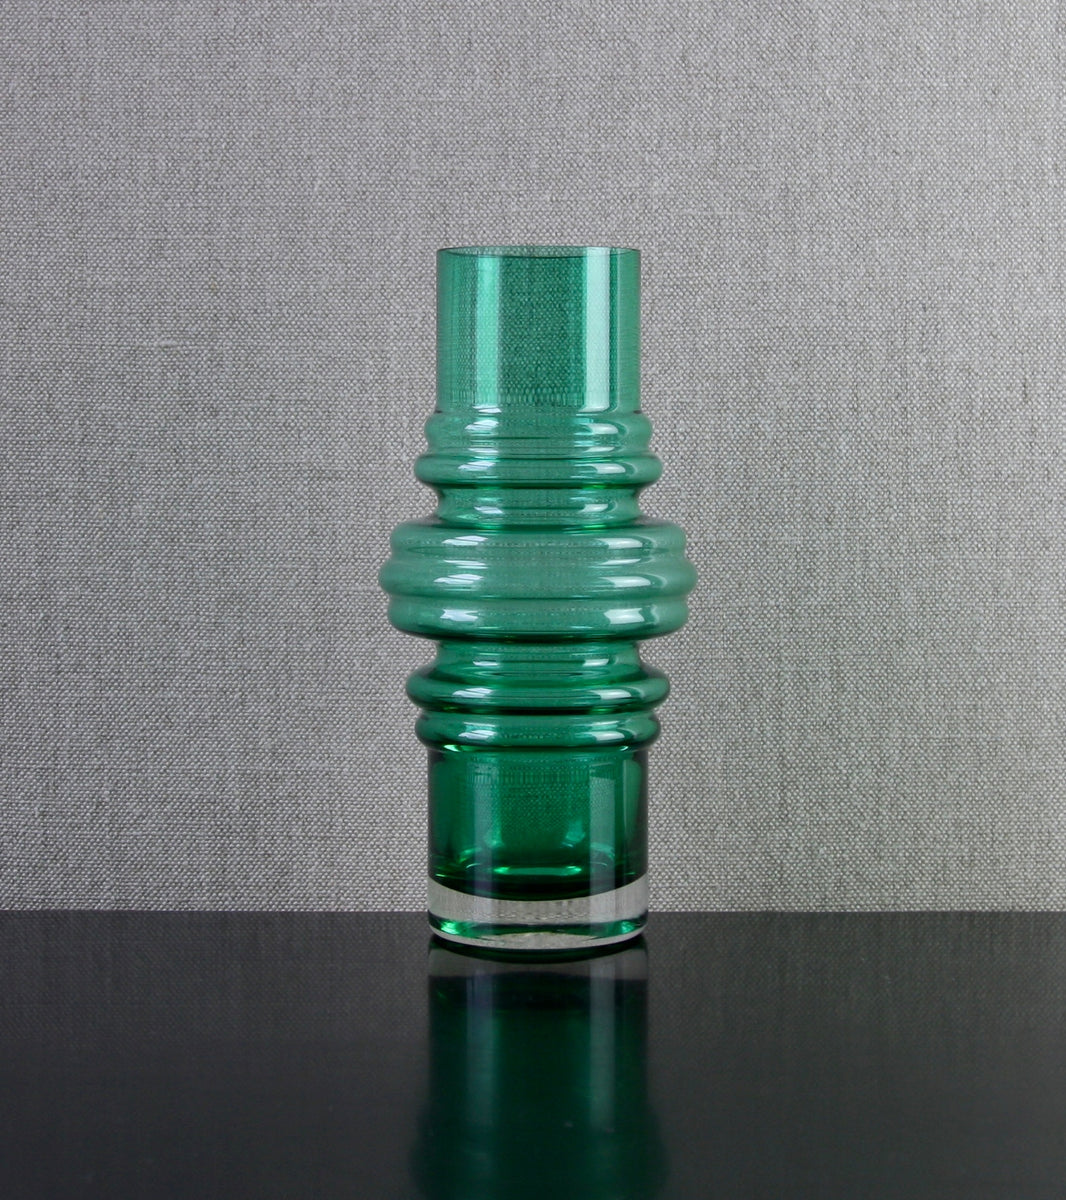 Malachite Green Model 1516 "Tulppaani" (Tulip) Vase by Tamara Aladin, 1971